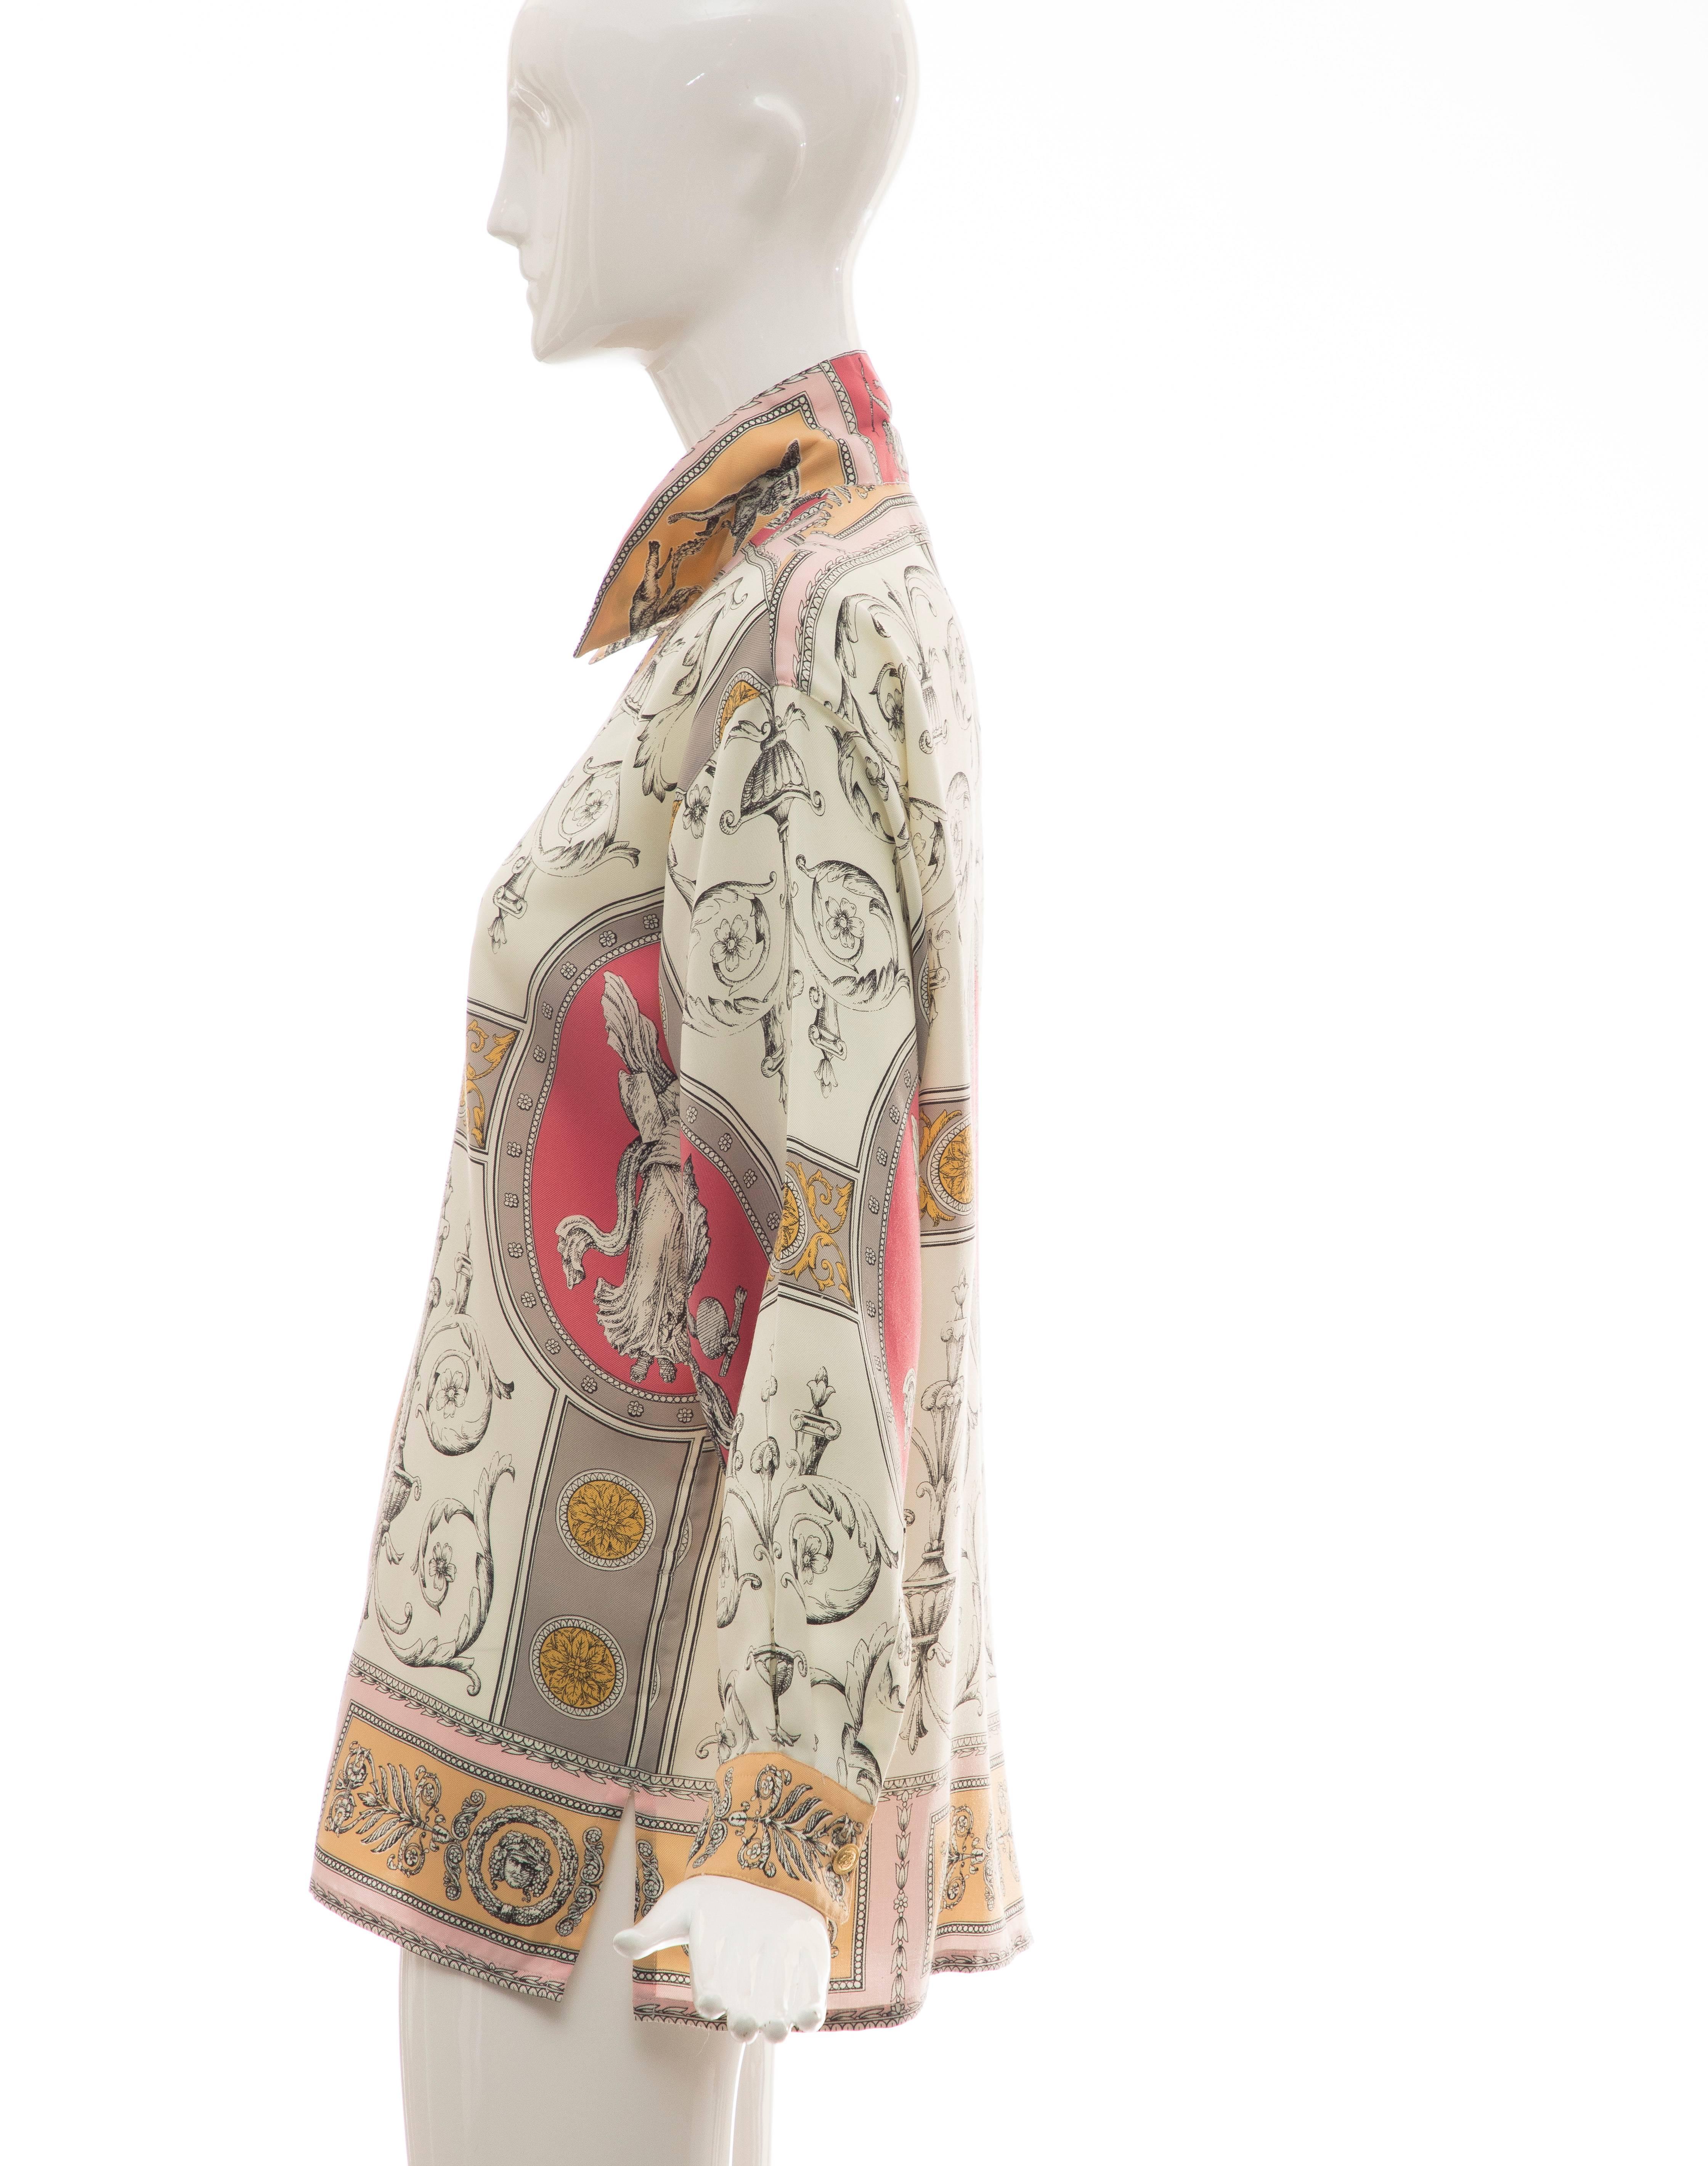 Gianni Versace Cherub Print Silk Blouse, Circa 1990's For Sale 1